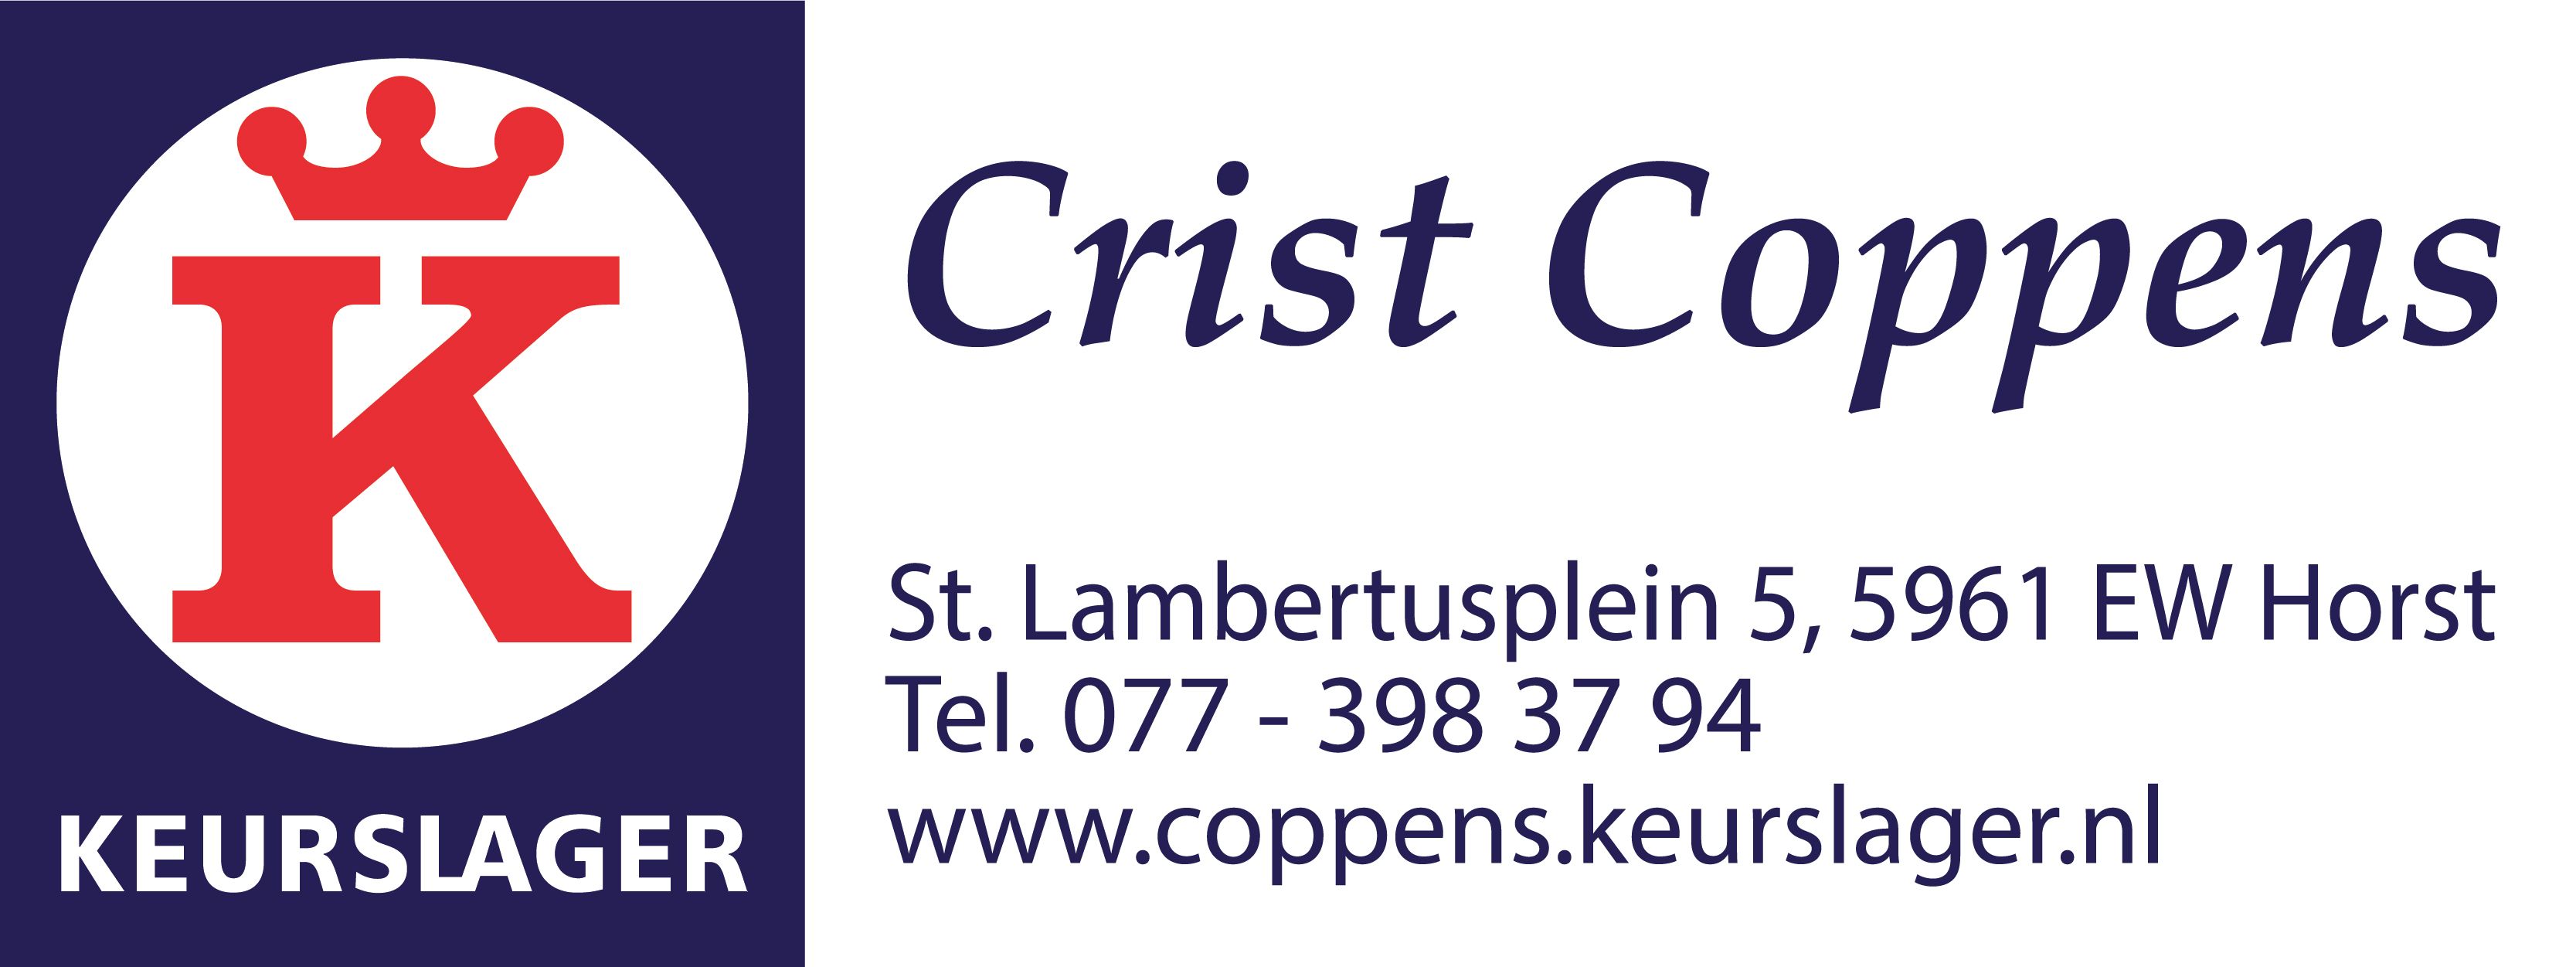 BANNER-CENTRAAL-Slagerij Crist Coppens